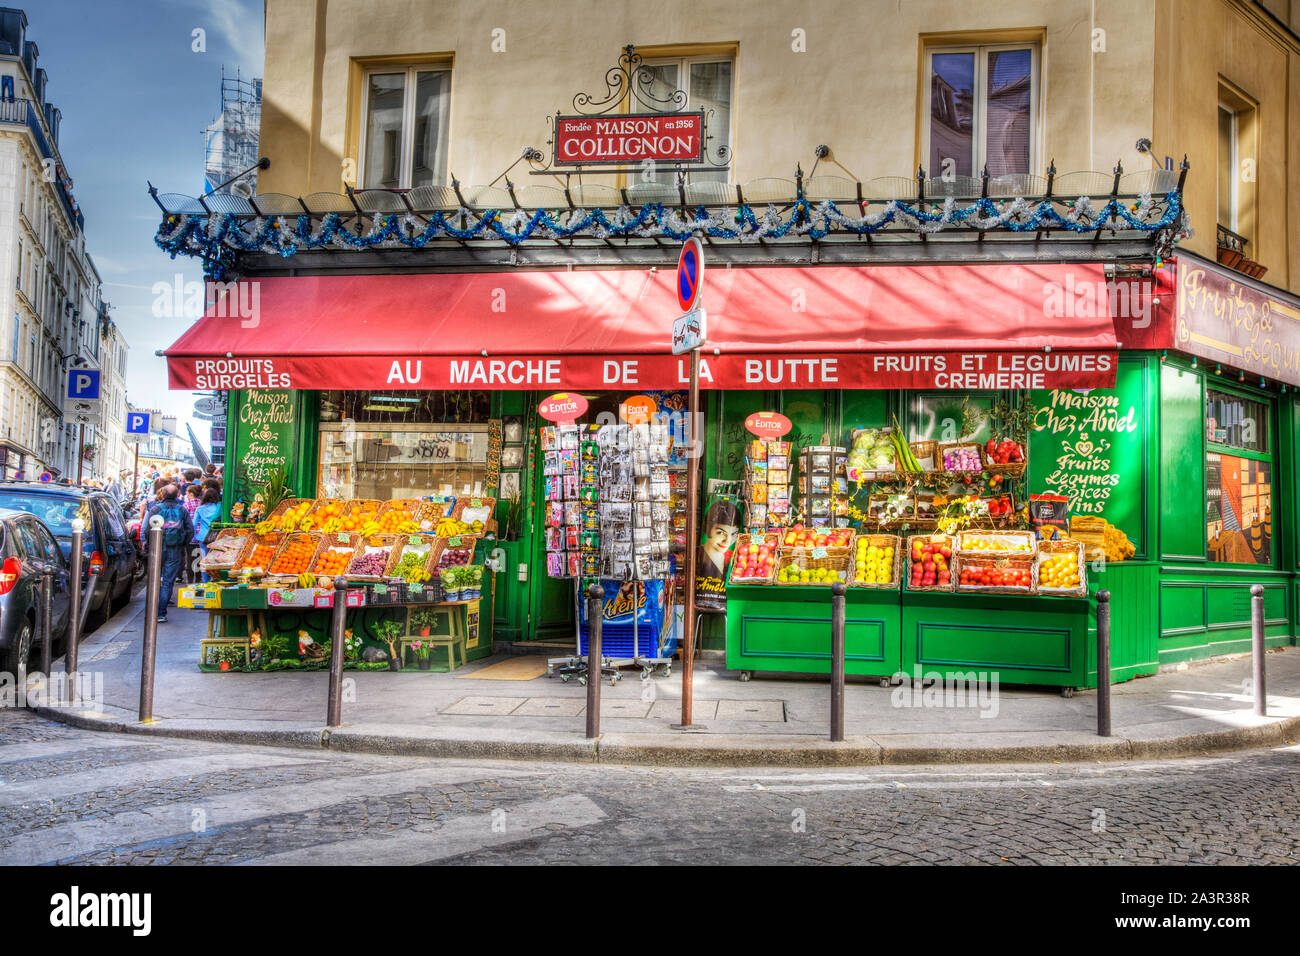 Au Marche de la Butte - Market in Montmartre, used in film 'Amelie' Stock Photo